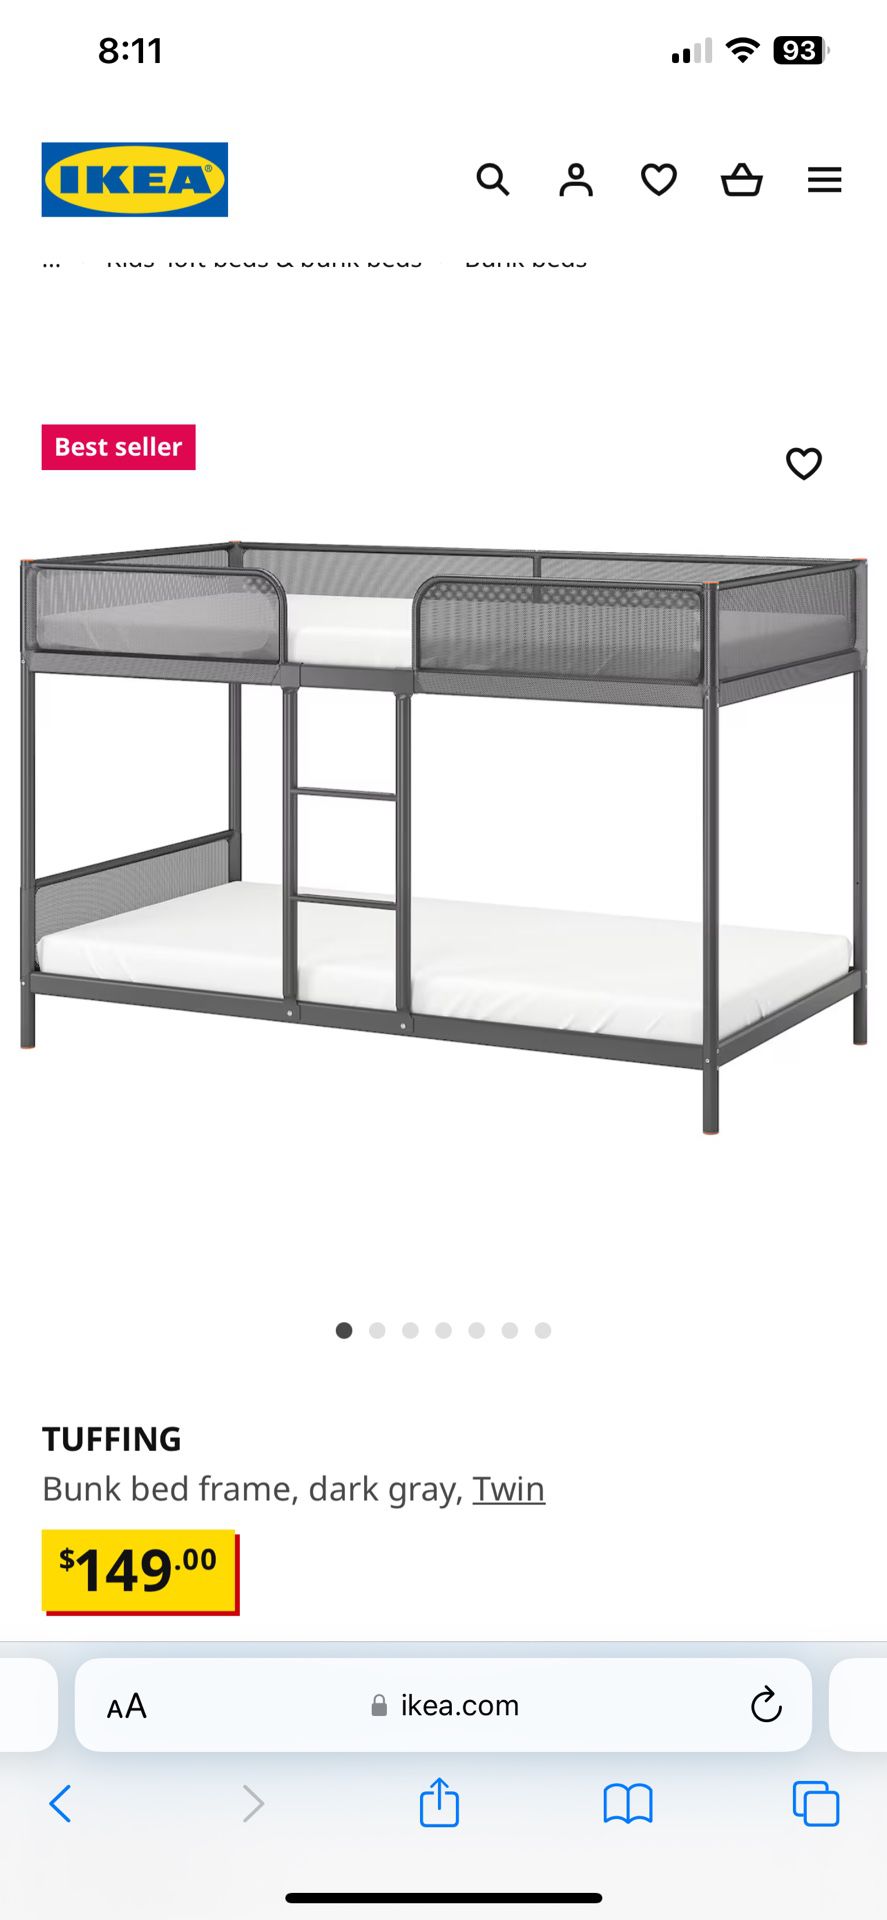 IKEA Tuffing Twin Bunk Bed Frame 